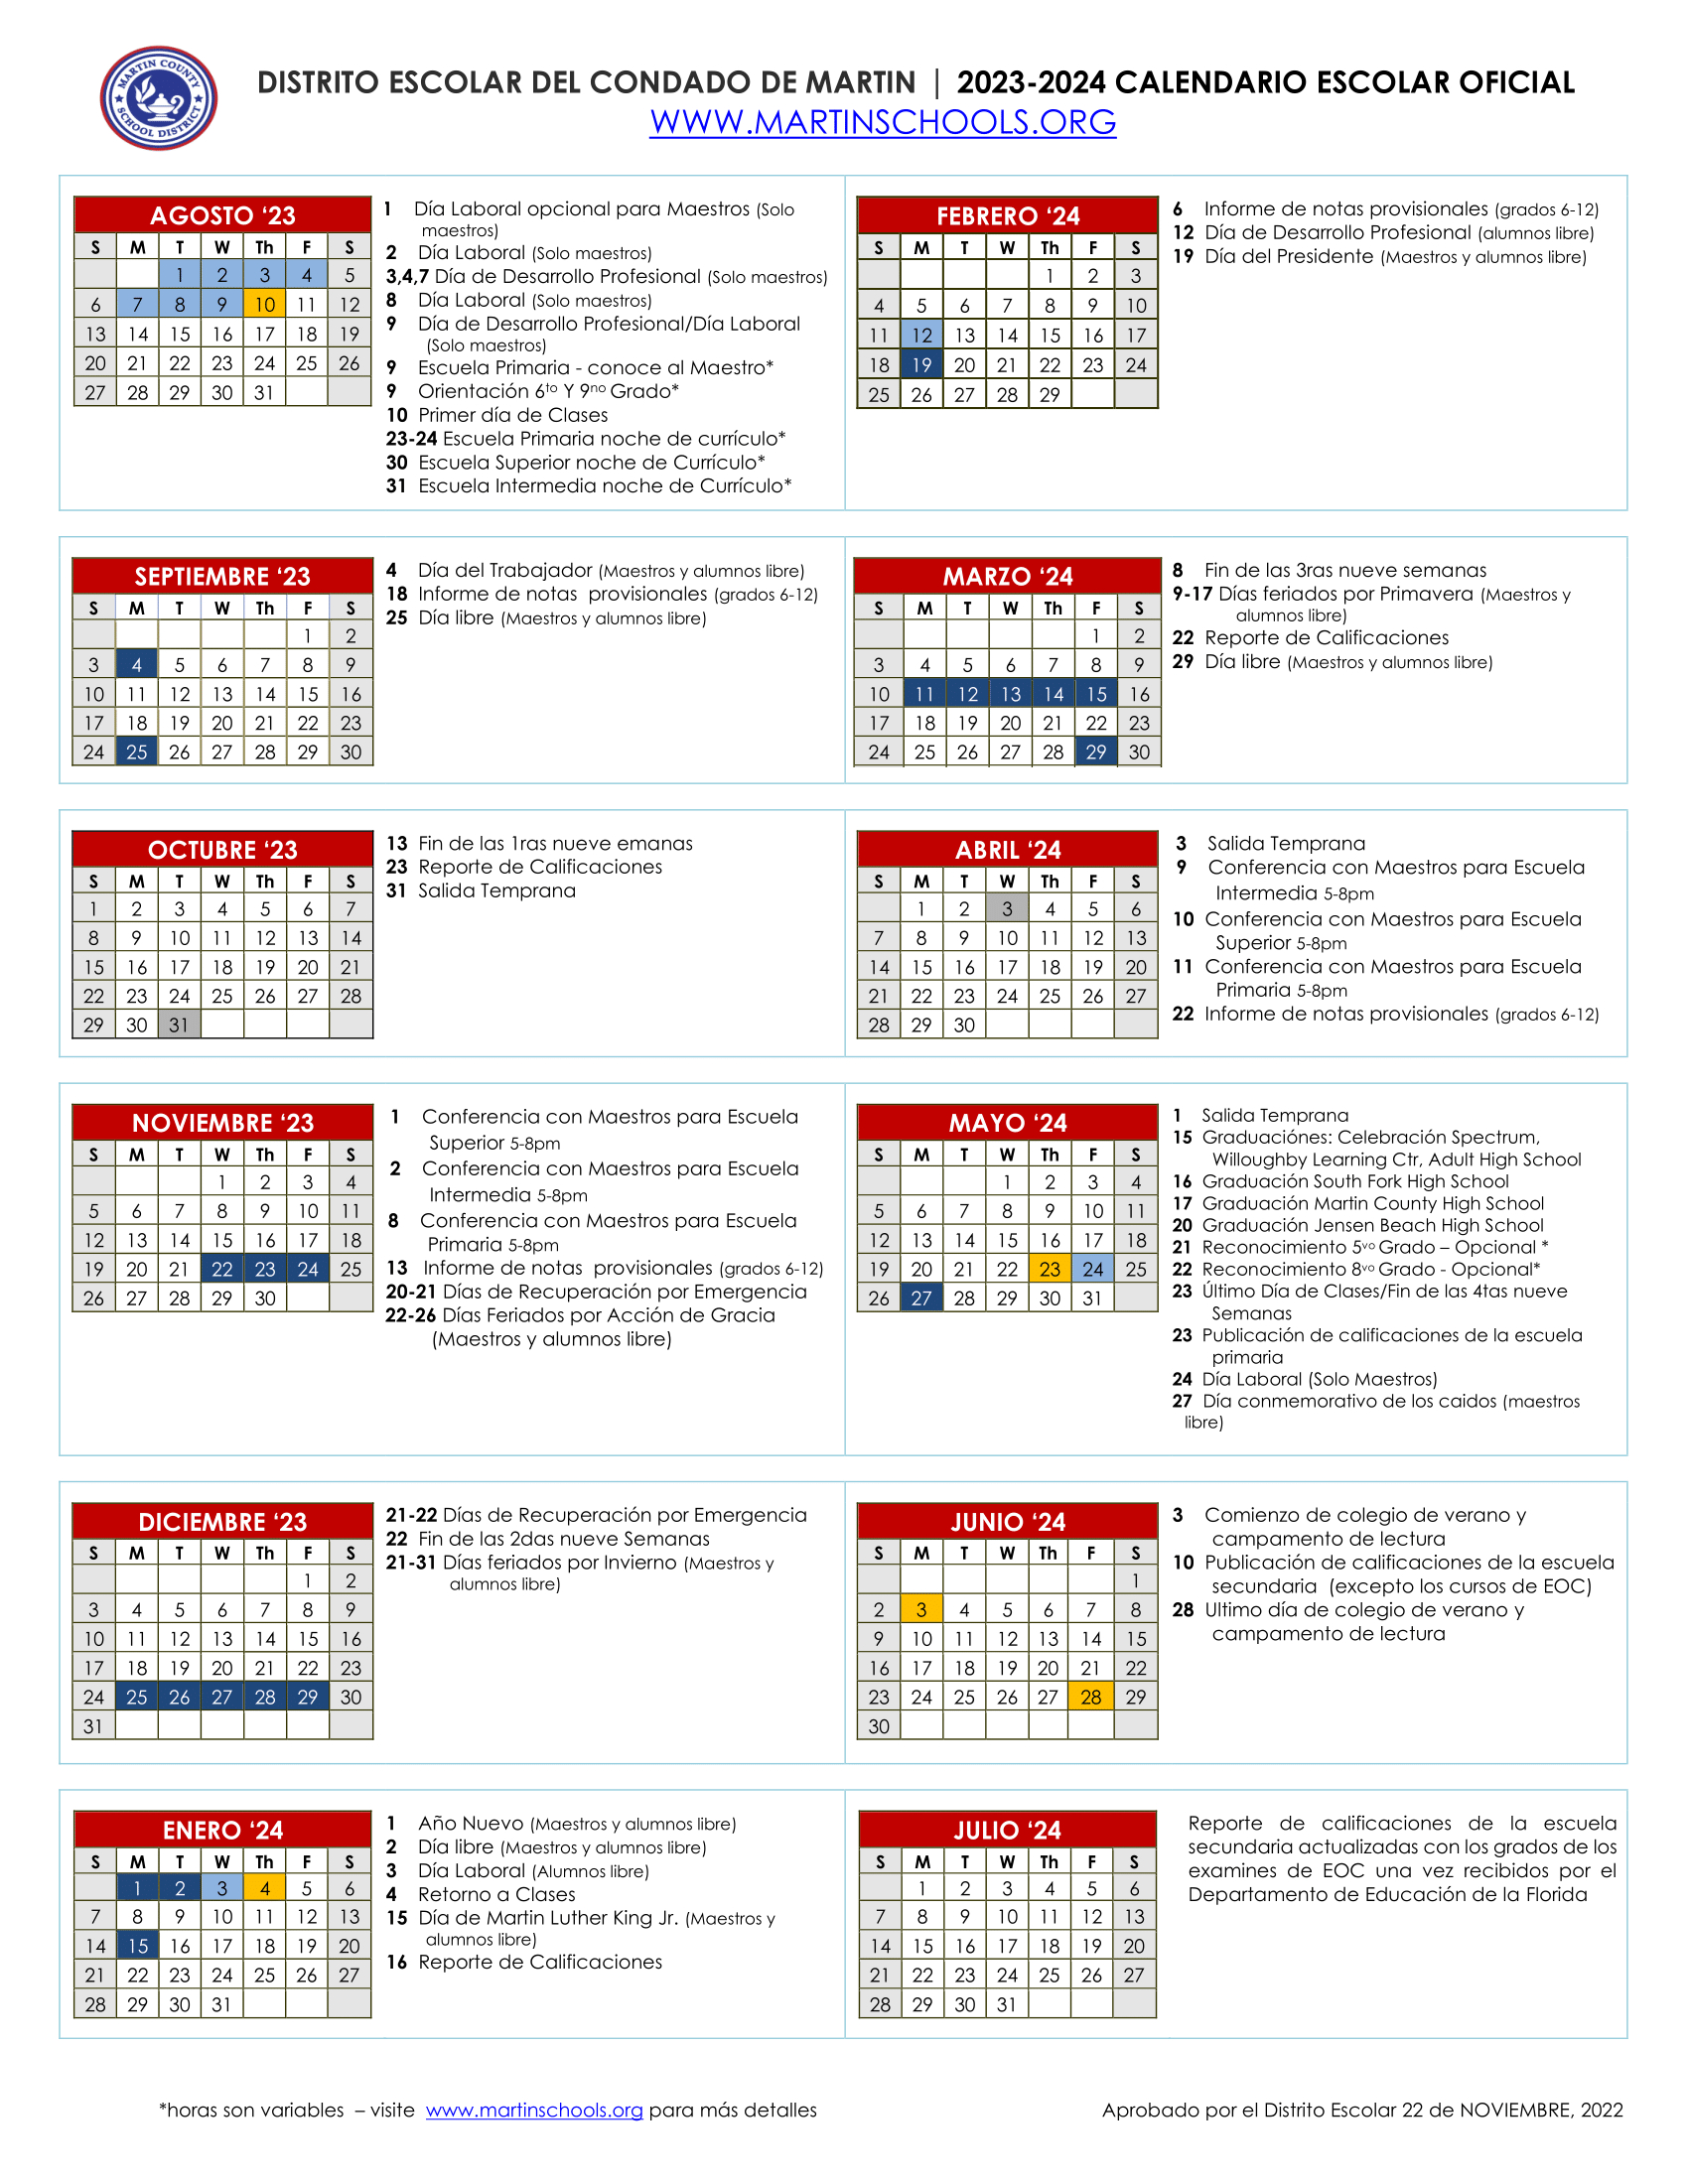 My Ips School Calendar For 2023 2024 Printable Calendar 2024